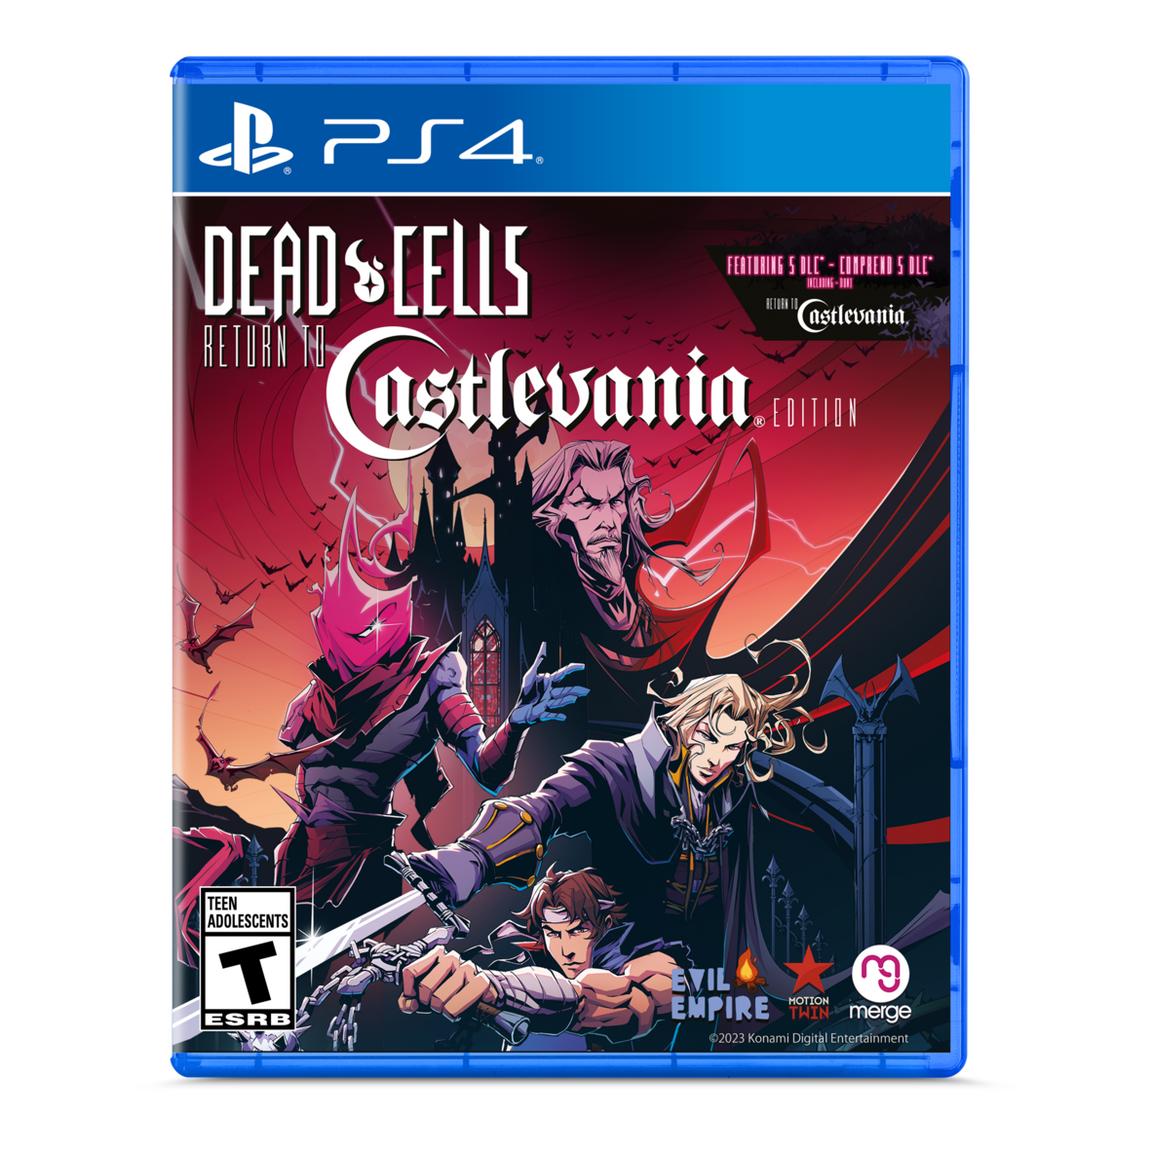 Видеоигра Dead Cells: Return to Castlevania Edition - PlayStation 4 dead cells return to castlevania edition ps4 русские субтитры